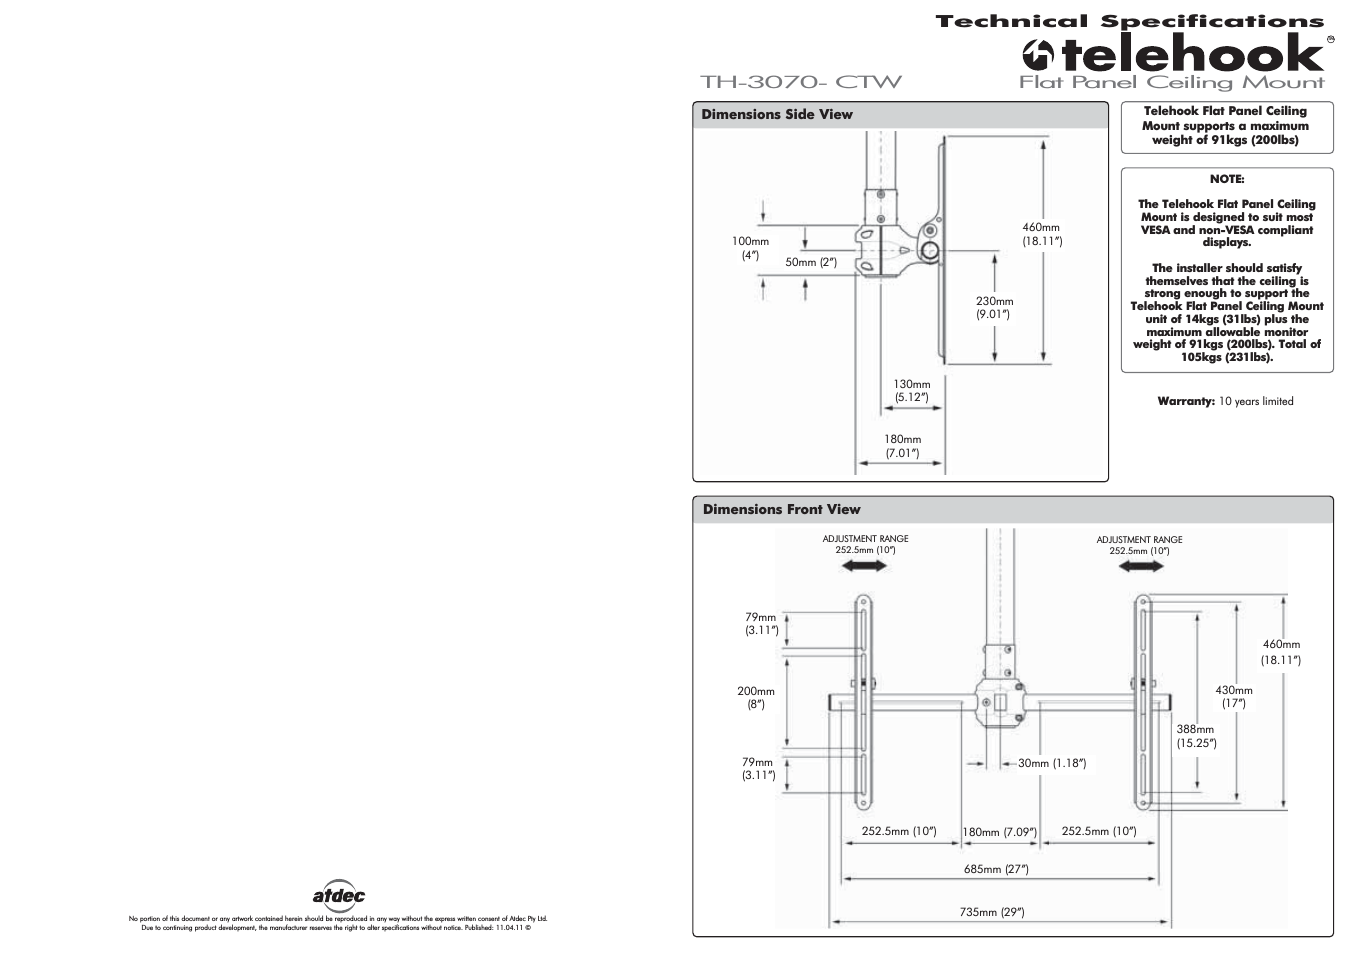 Telehook TH-3070-CTW Technical specs